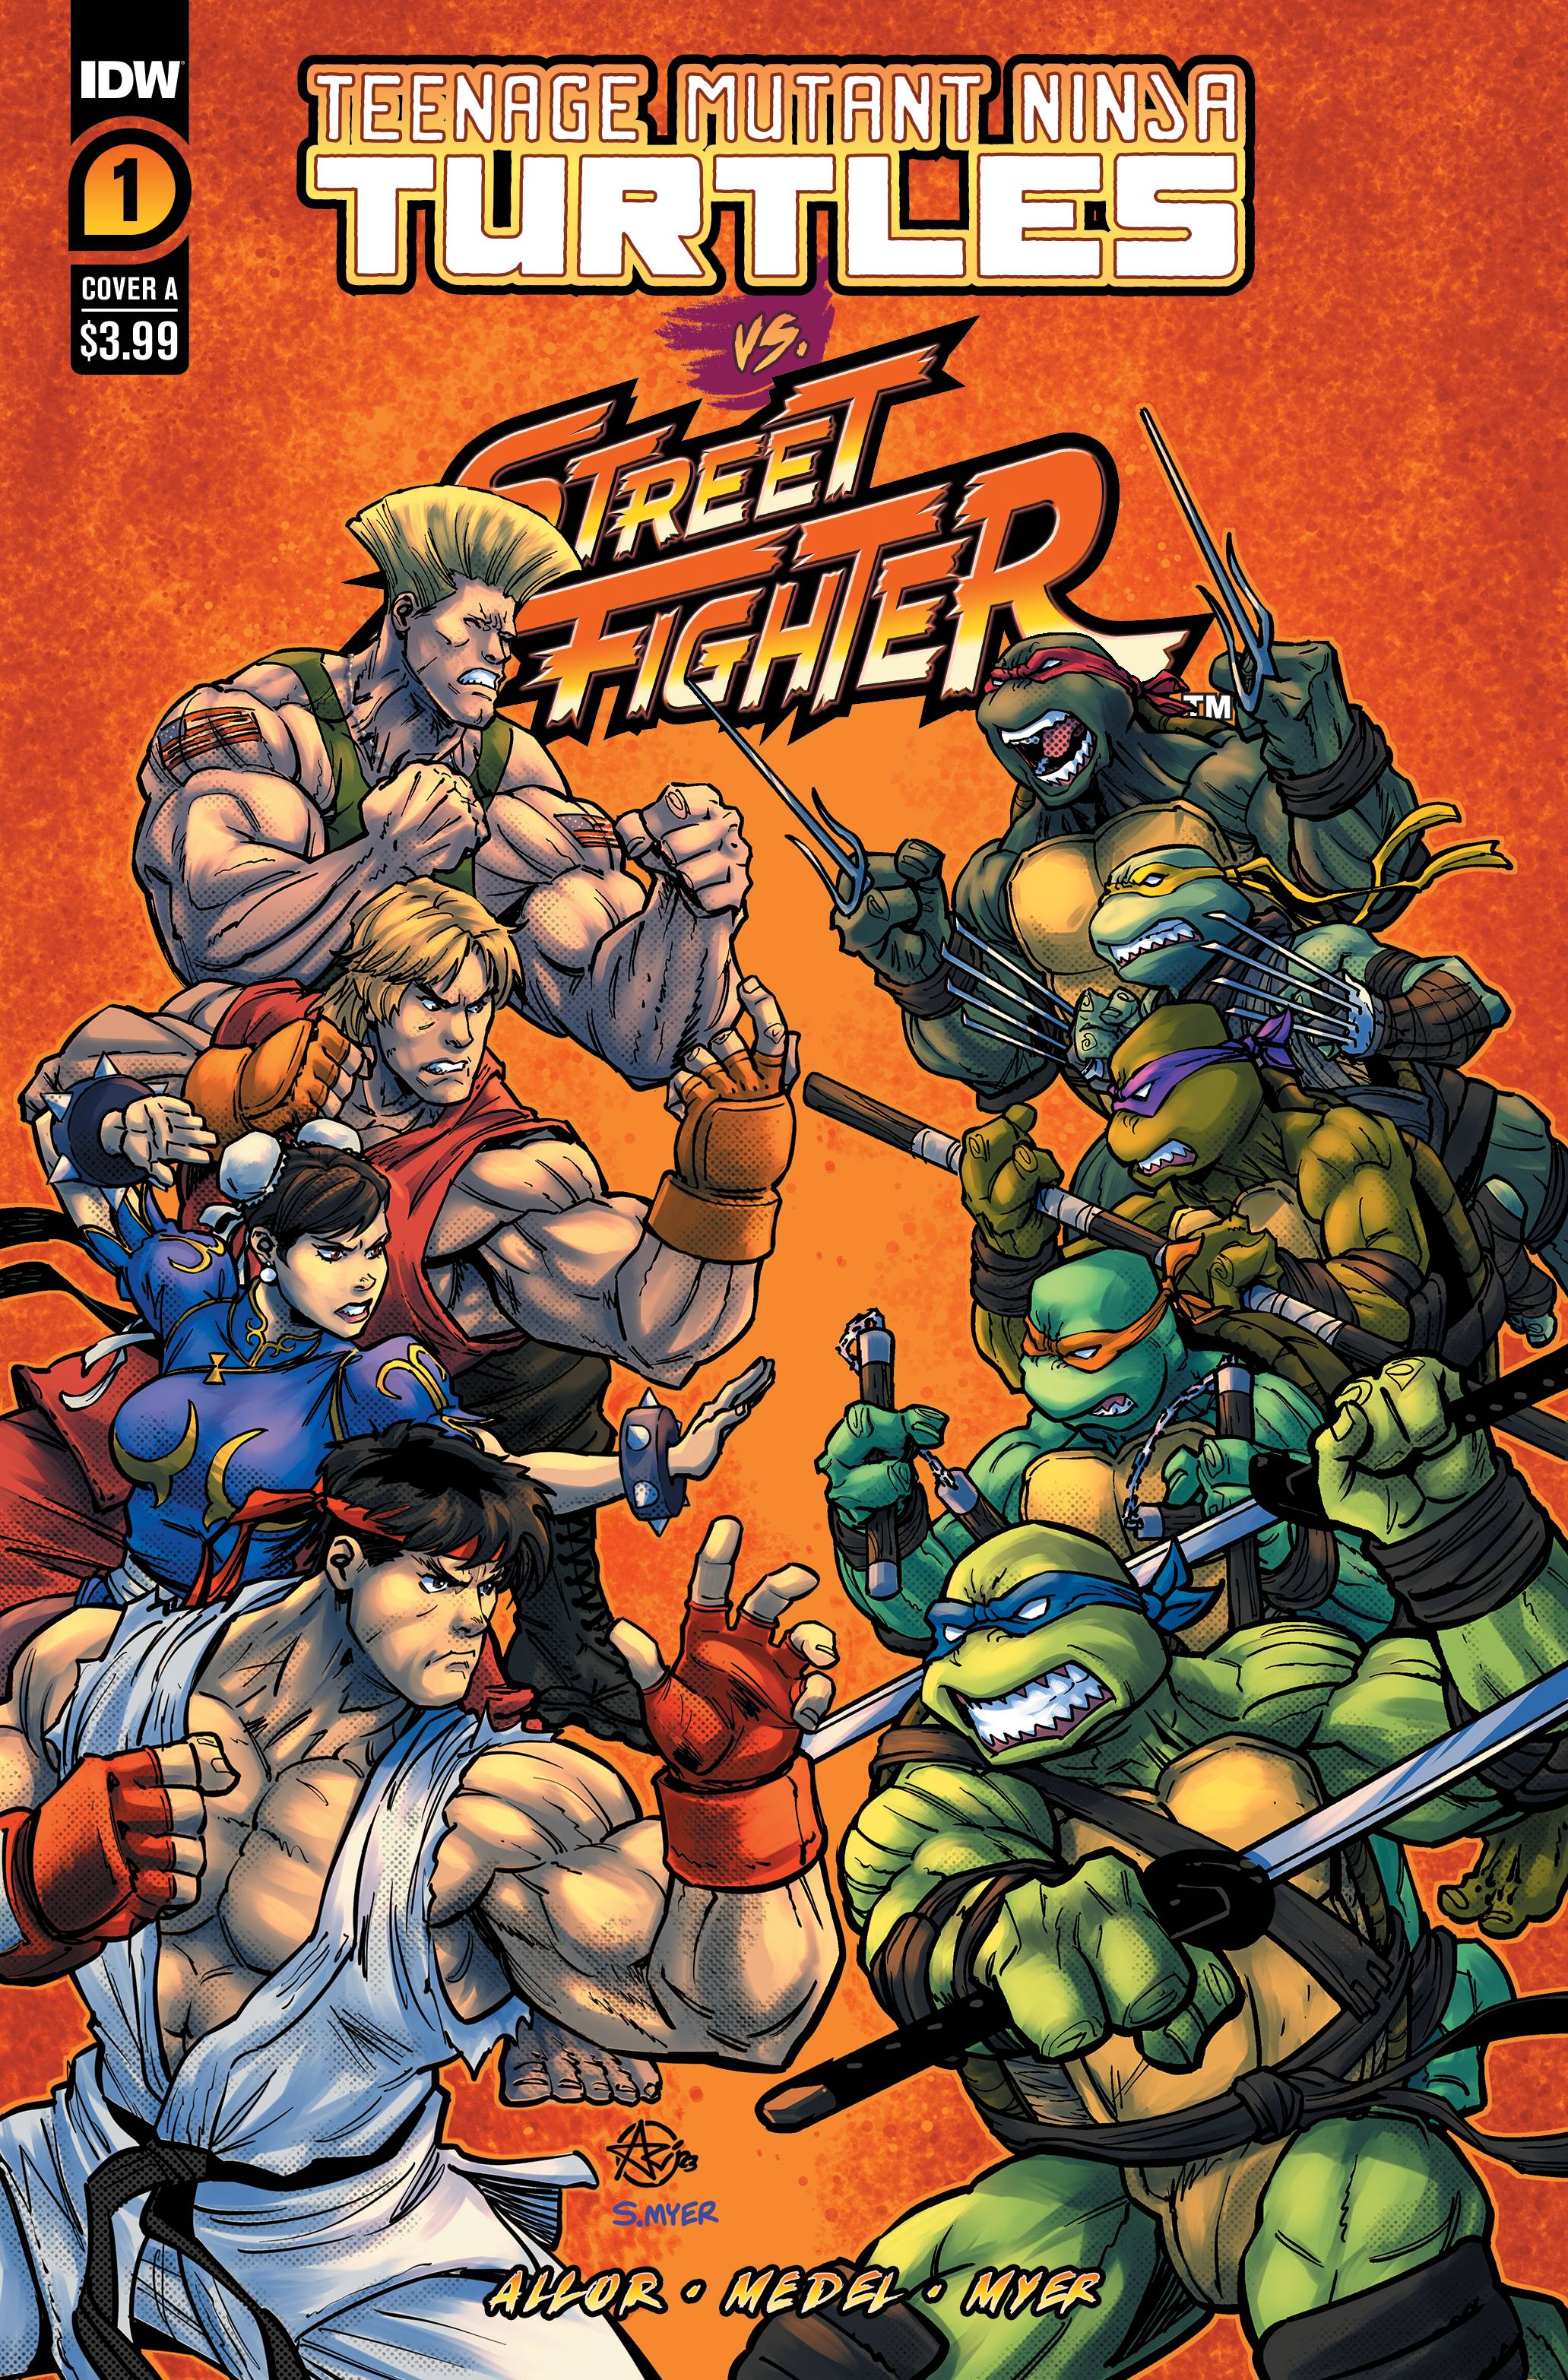 Tmnt street fighter comic